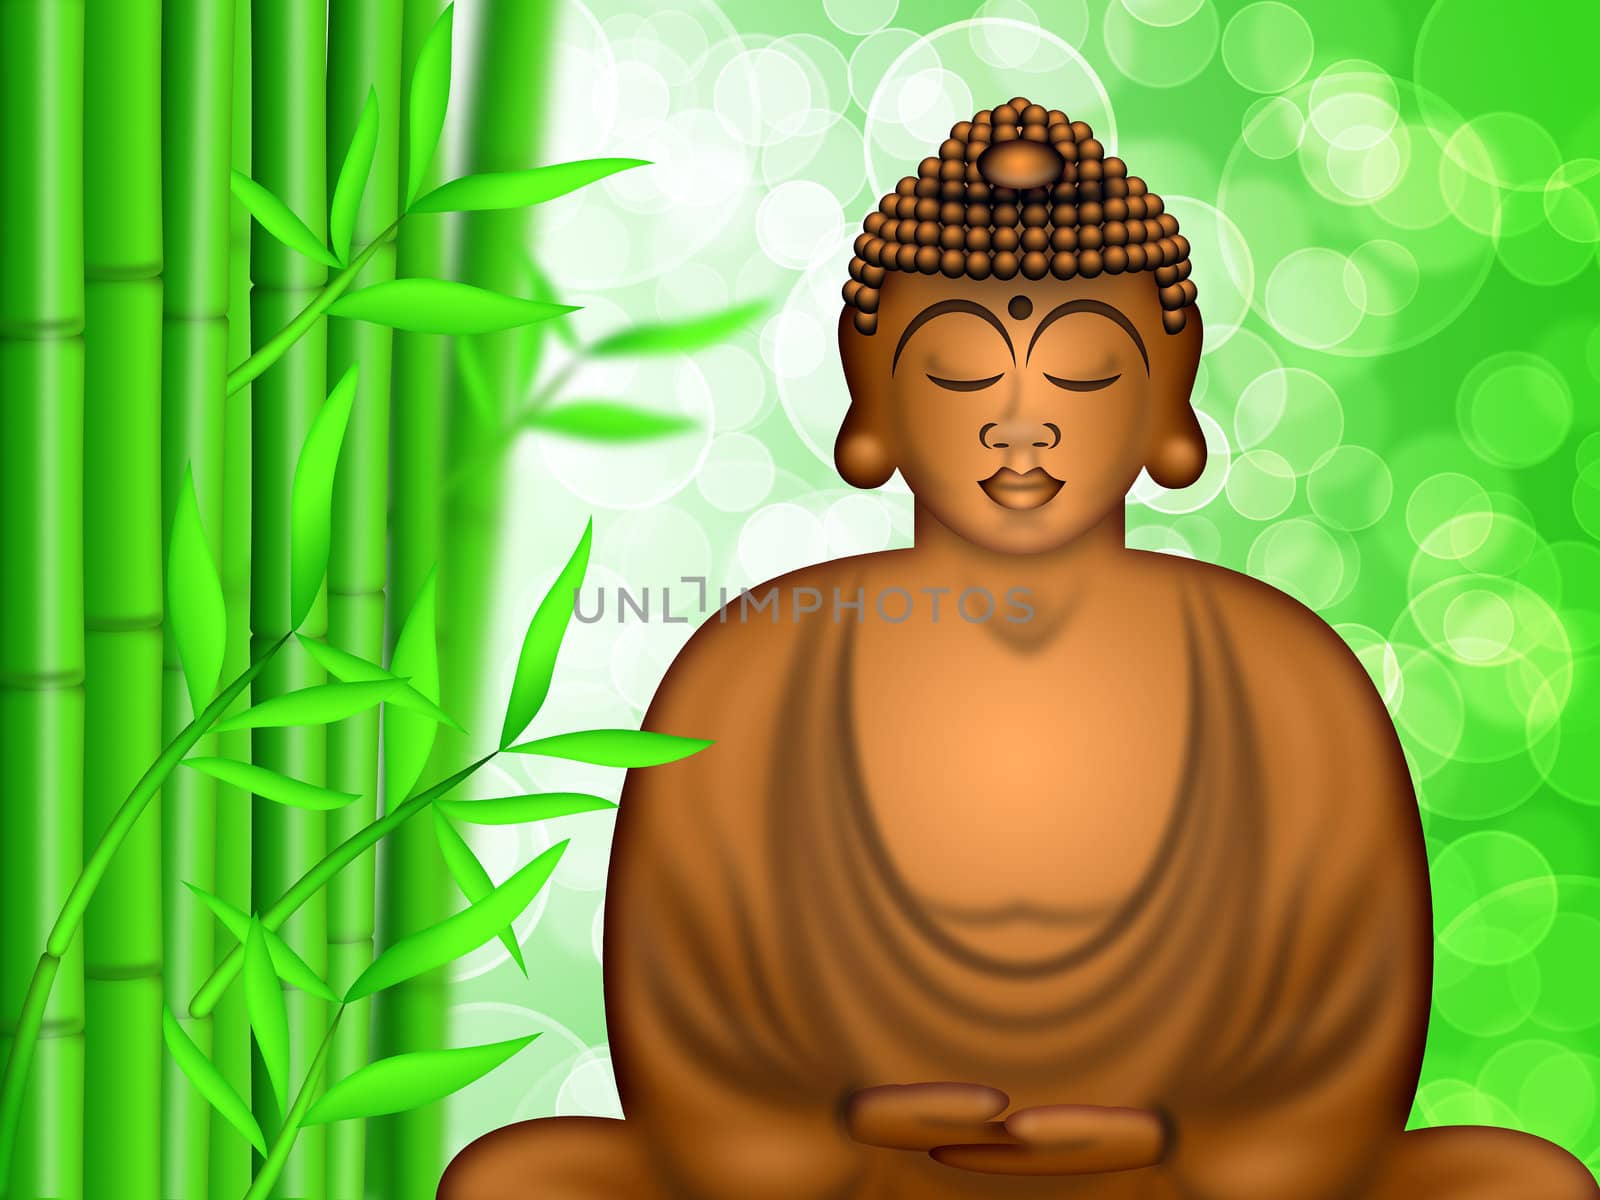 Zen Buddha Meditating by Bamboo Forest Blurred Background Illustration